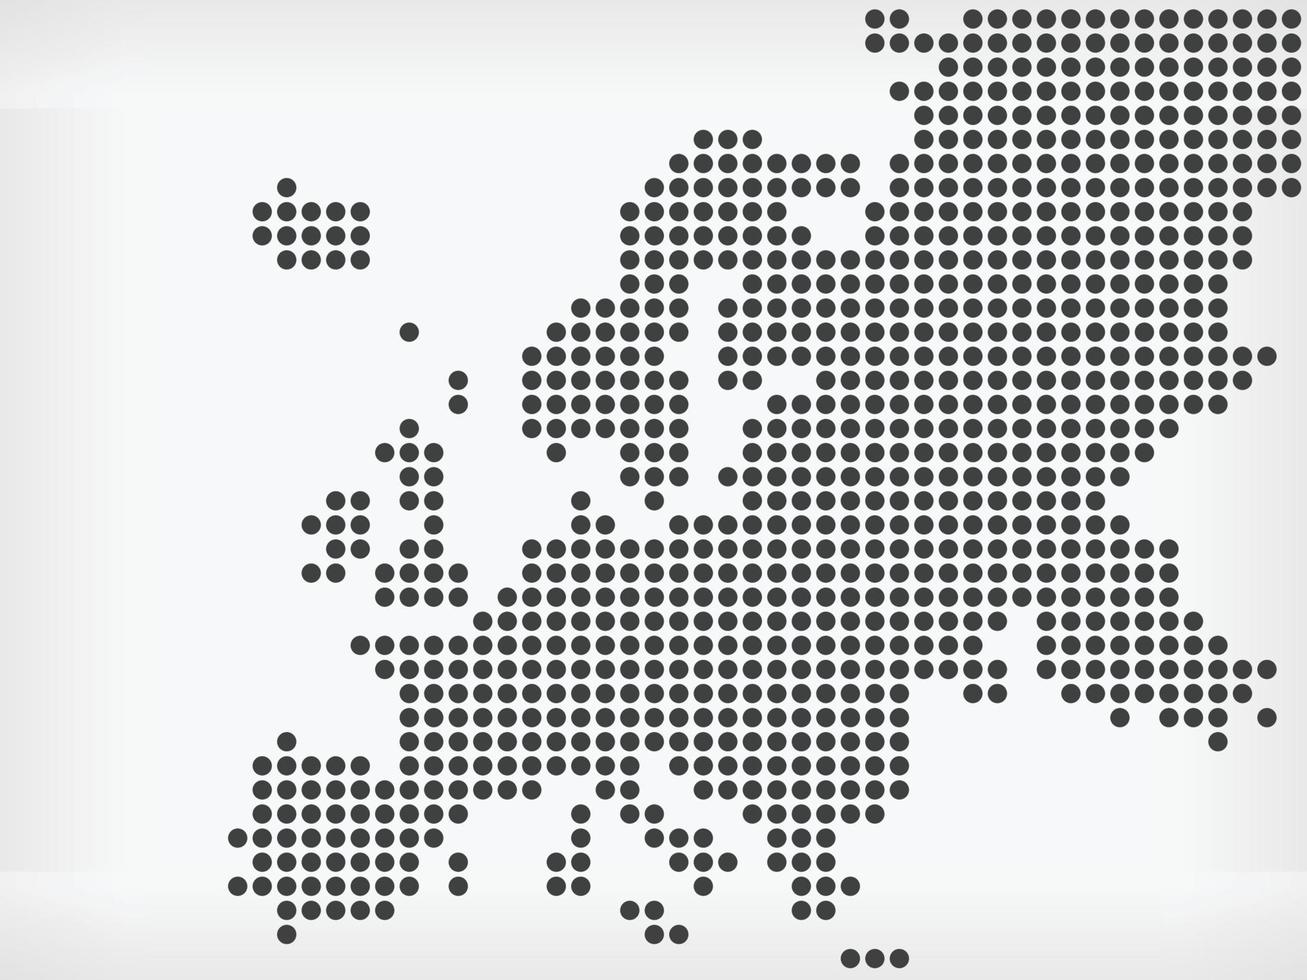 European Region Map Pixel Dots Continent Vector Infographic Element